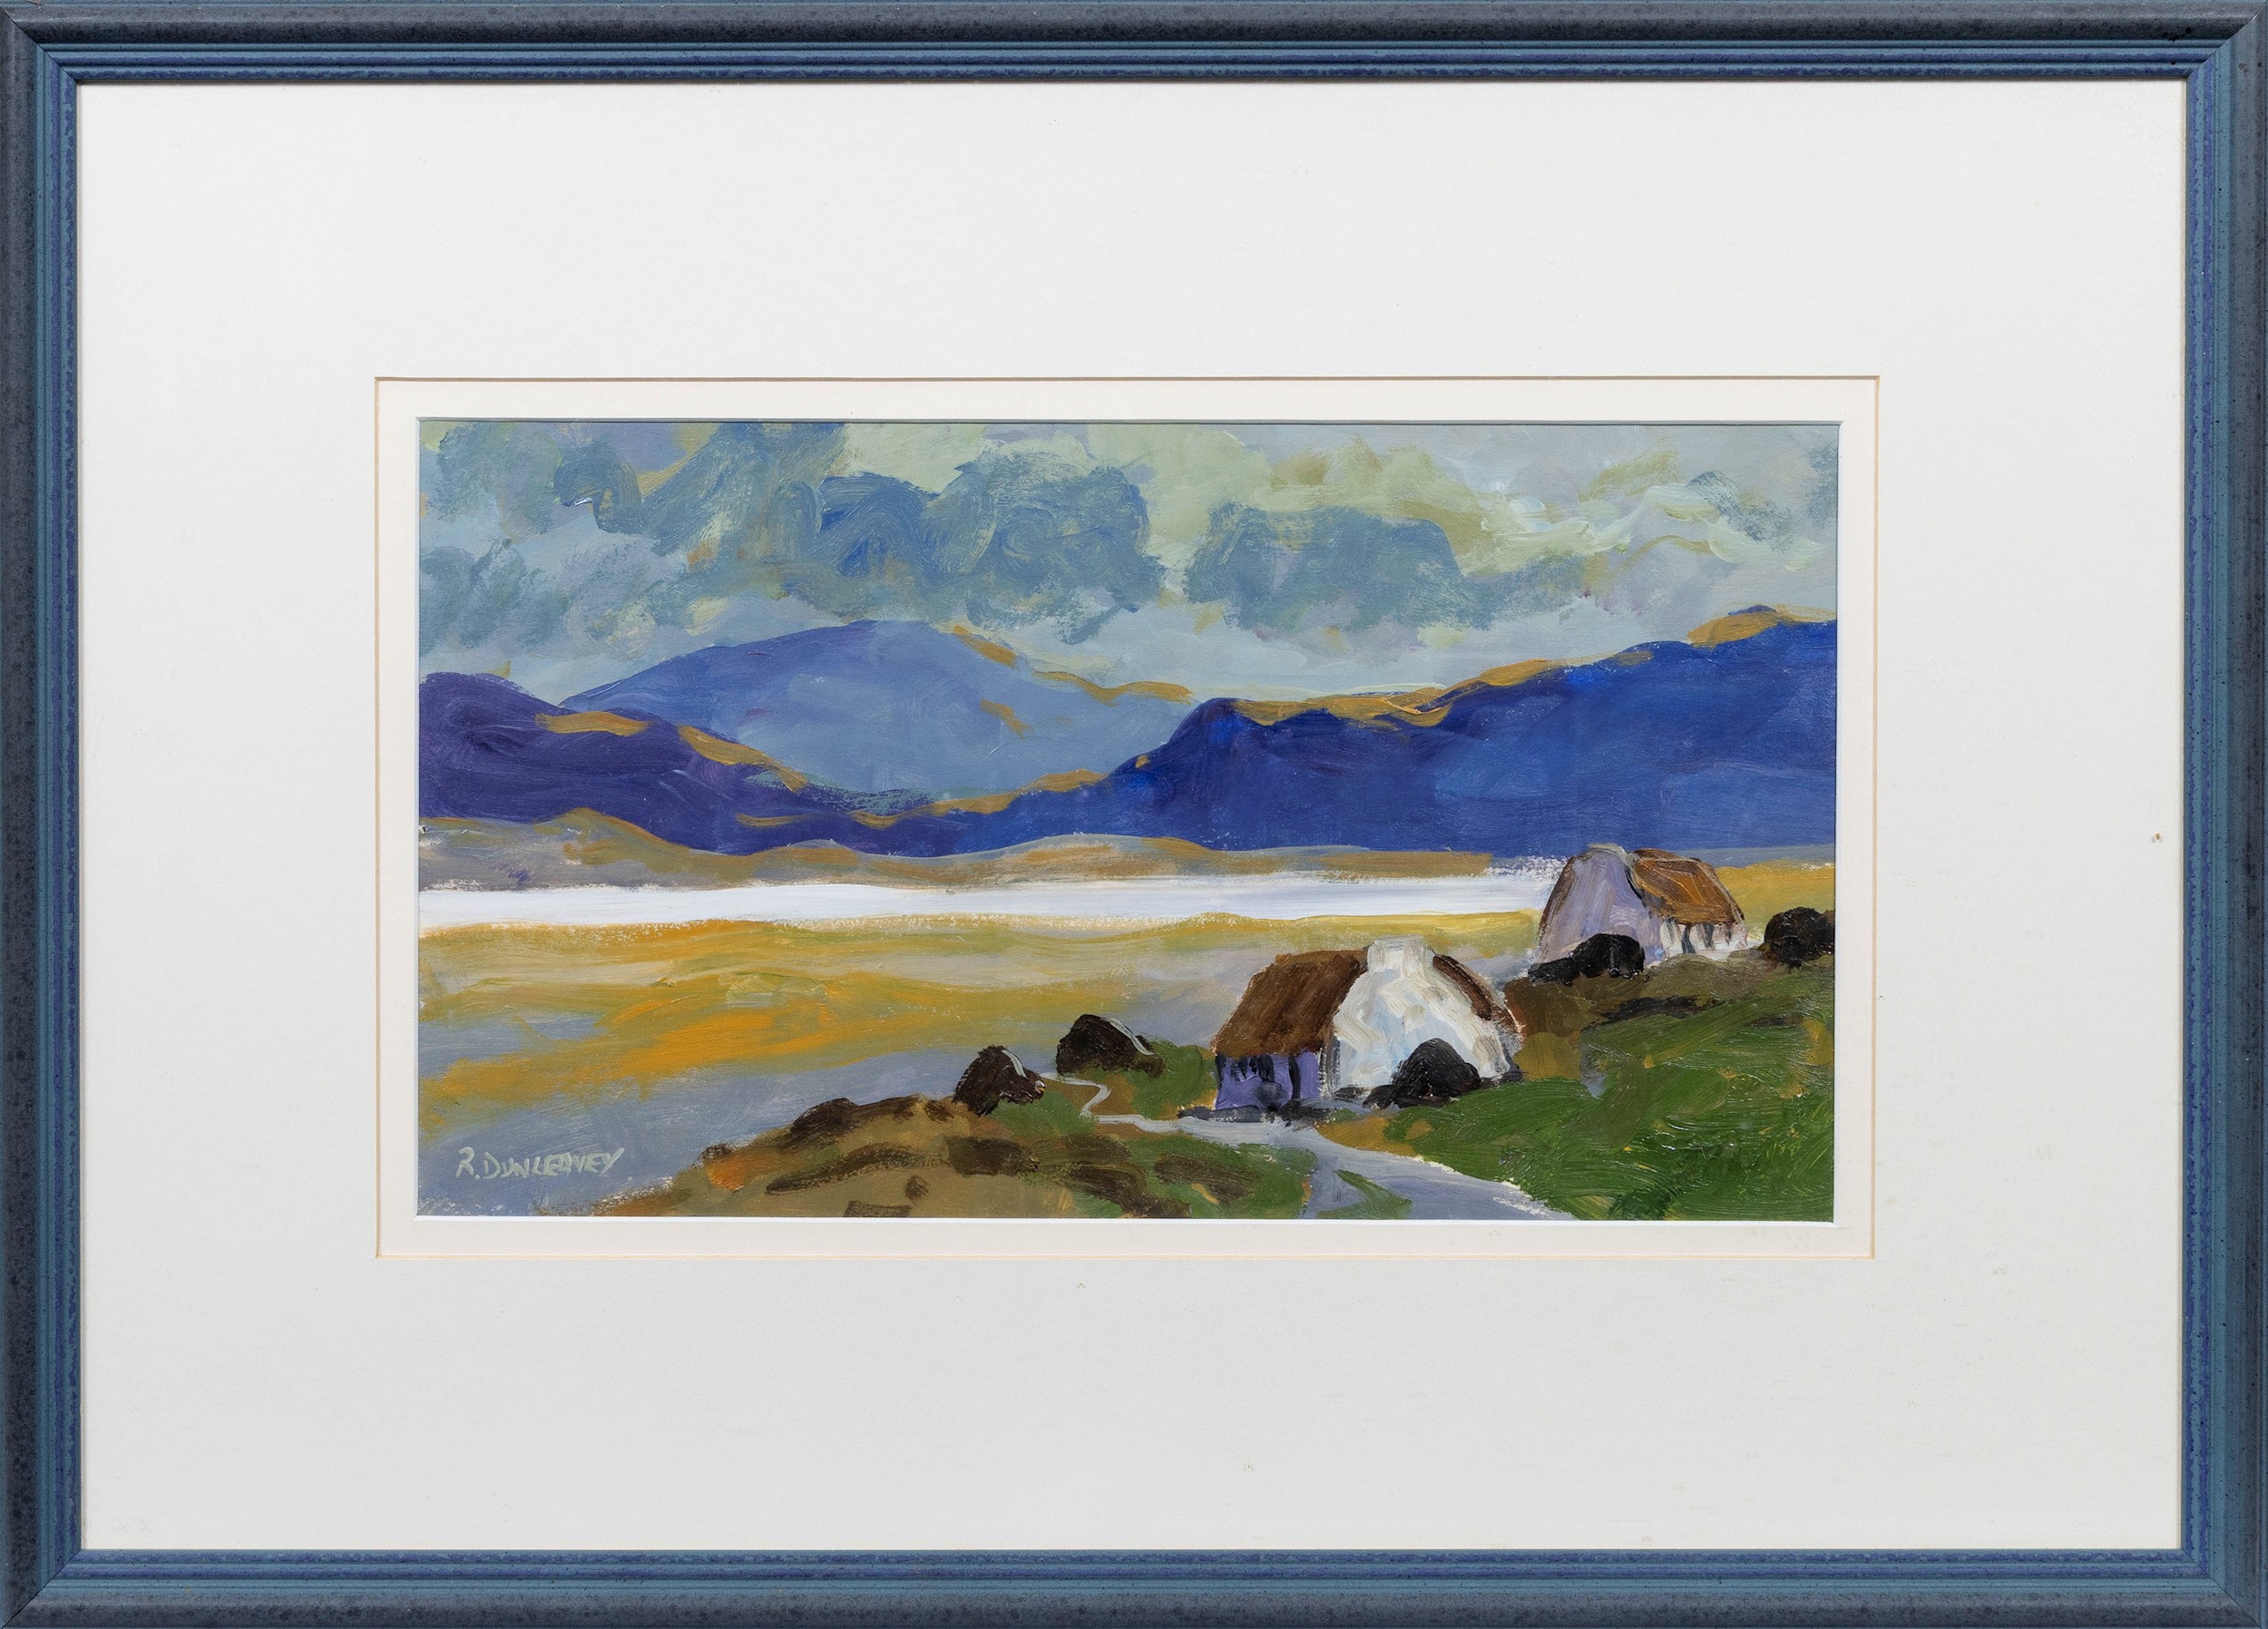 Robert Dunleavey (Irish, b. 1970), Cottages in a Lakeland Landscape. oil on board, signed lower - Image 2 of 2